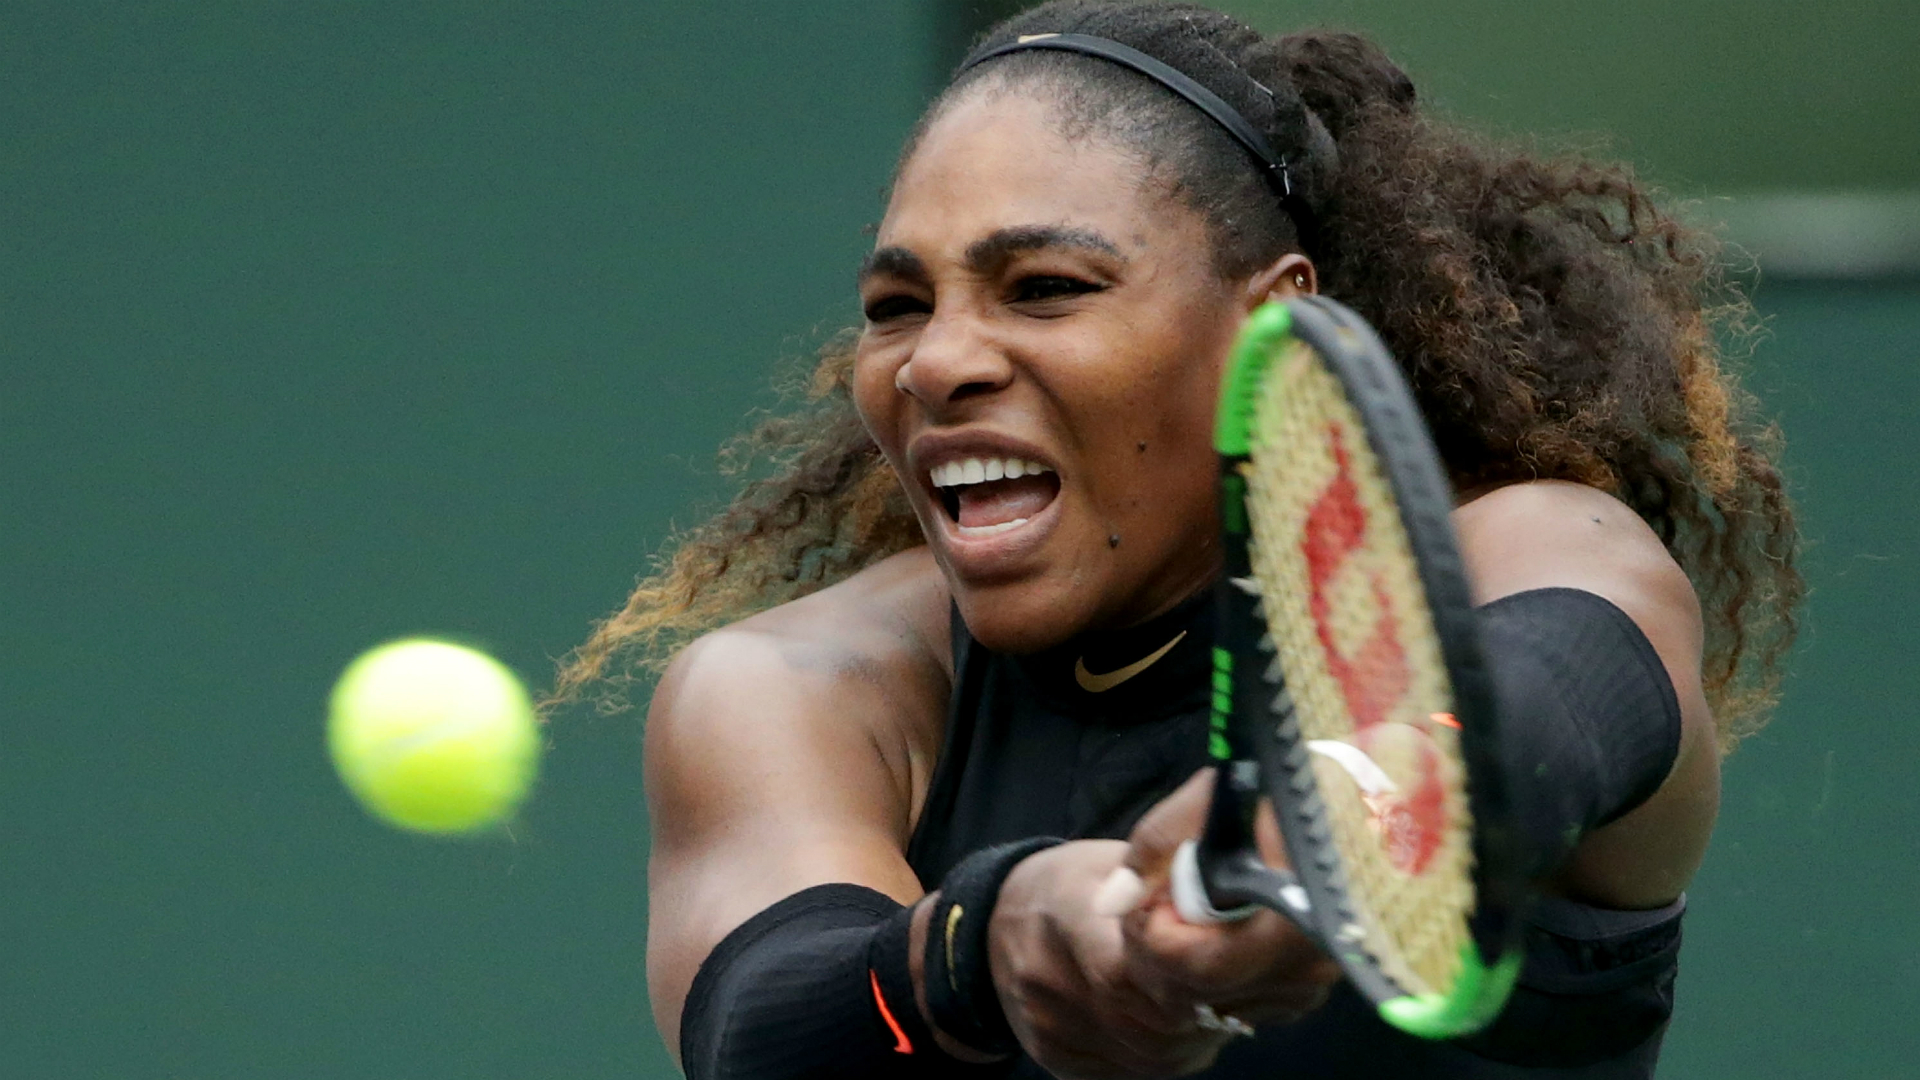 Serena Williams dreading showdown with sister Venus | Tennis | Sporting News1920 x 1080